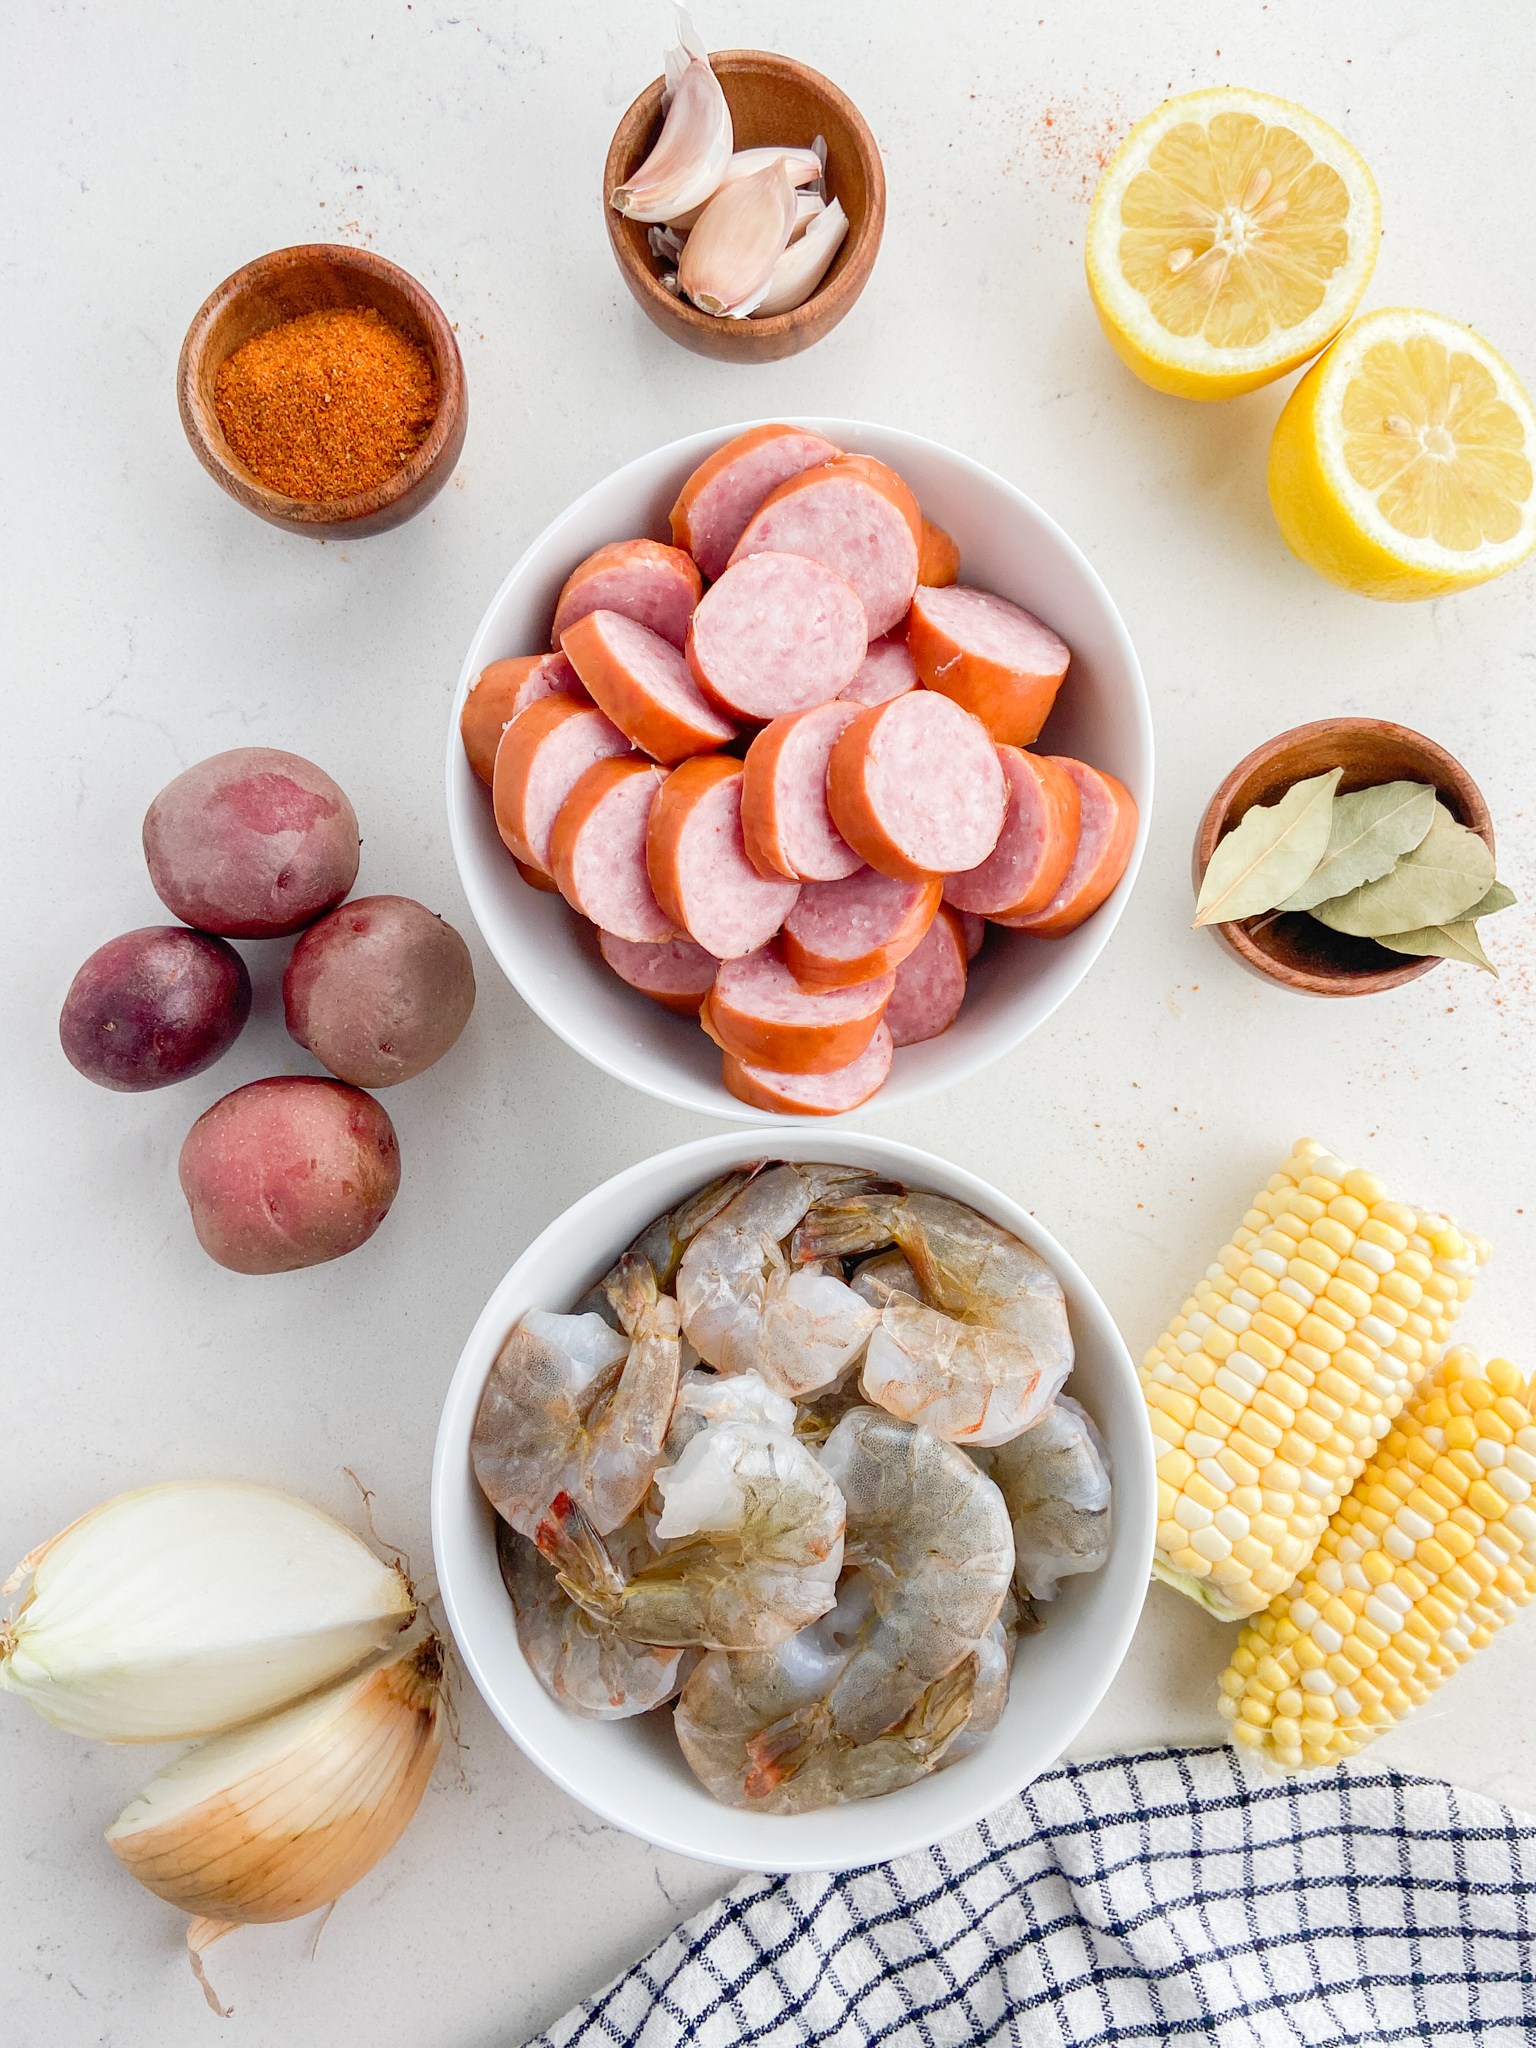 Shrimp Boil Recipe - Low Country Boil Recipe - Life's Ambrosia